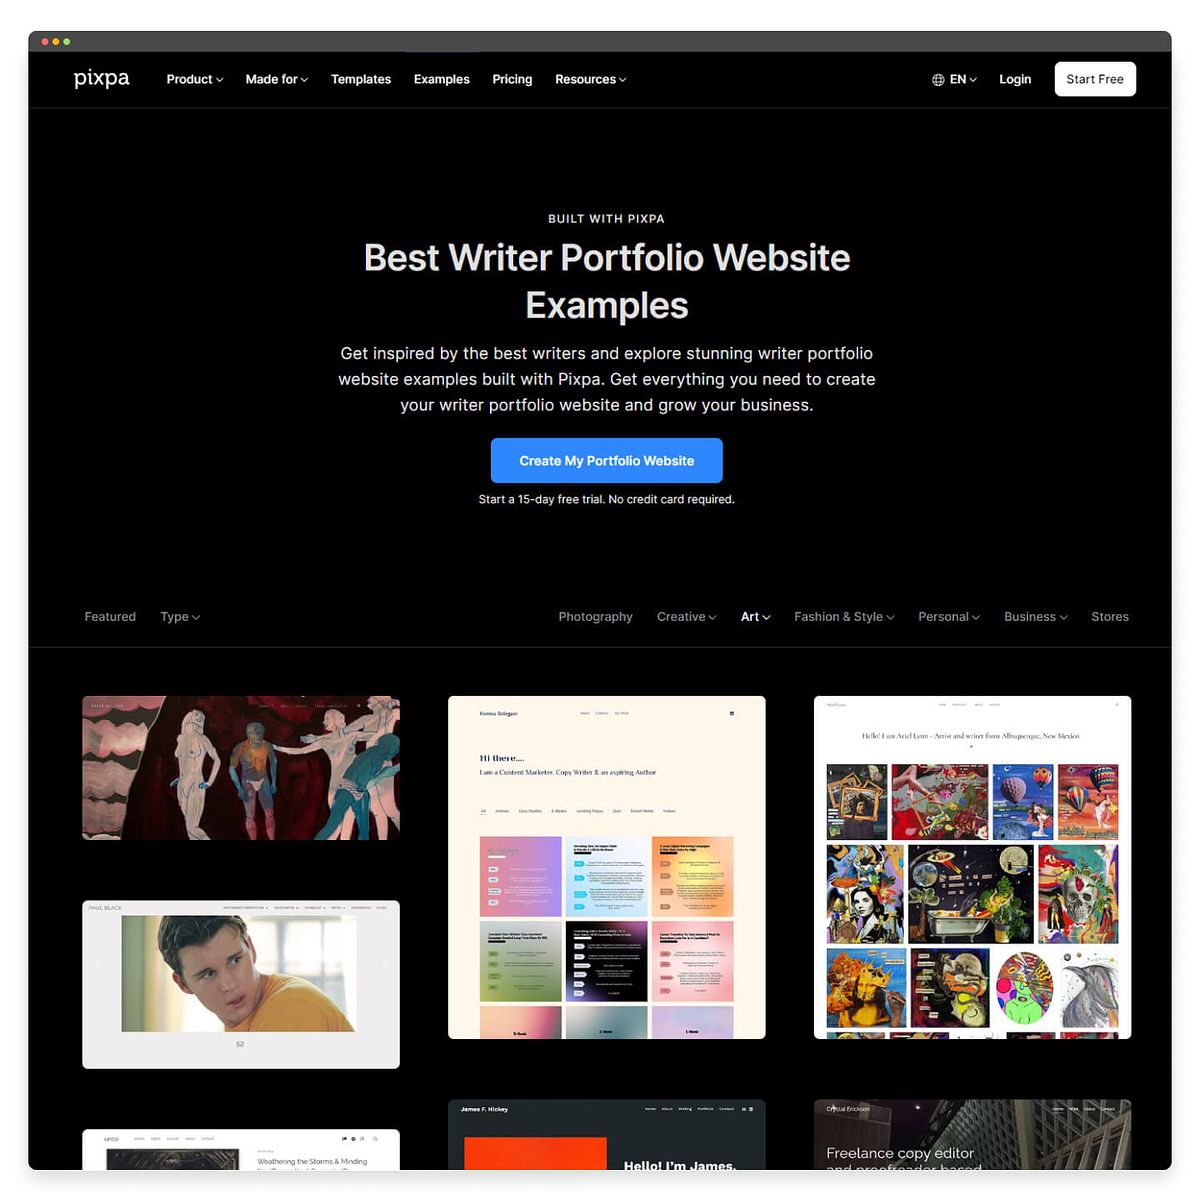 Pixpa's writer portfolio website example page